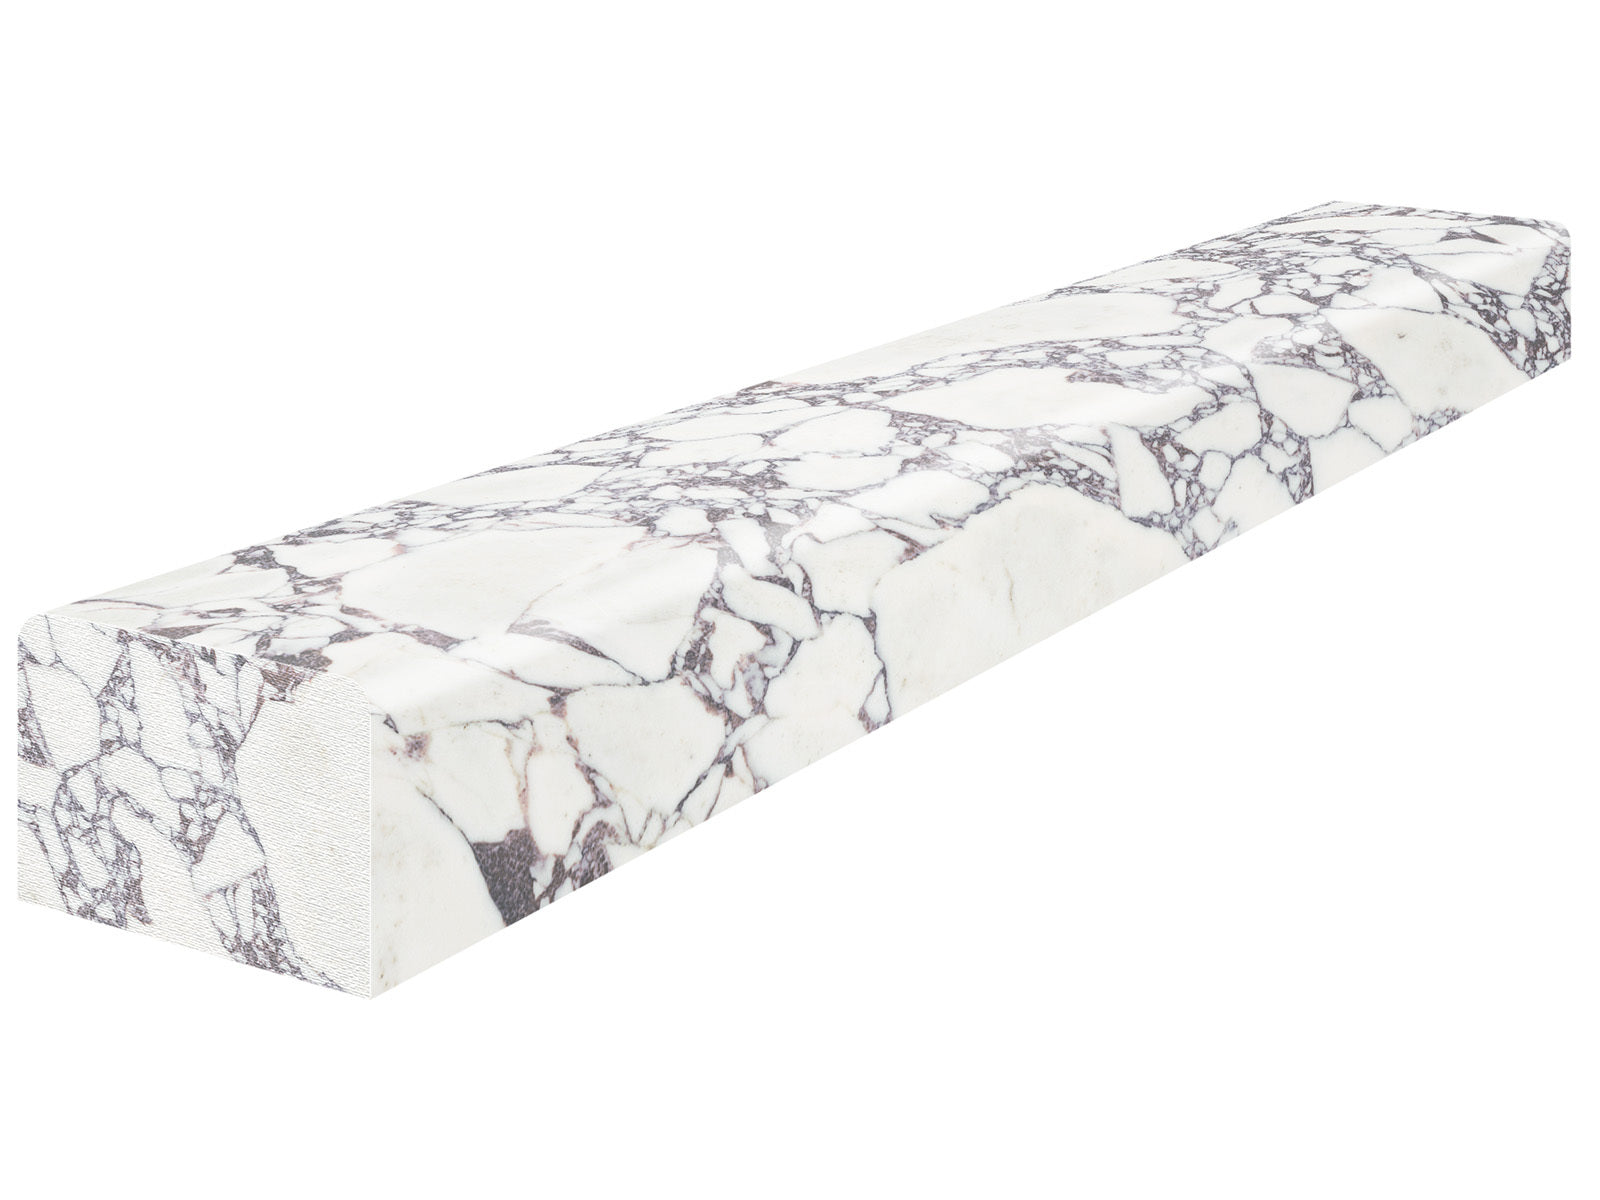 surface group anatolia marble viola roccia natural stone deco bar molding honed straight edge bar 1&25х12